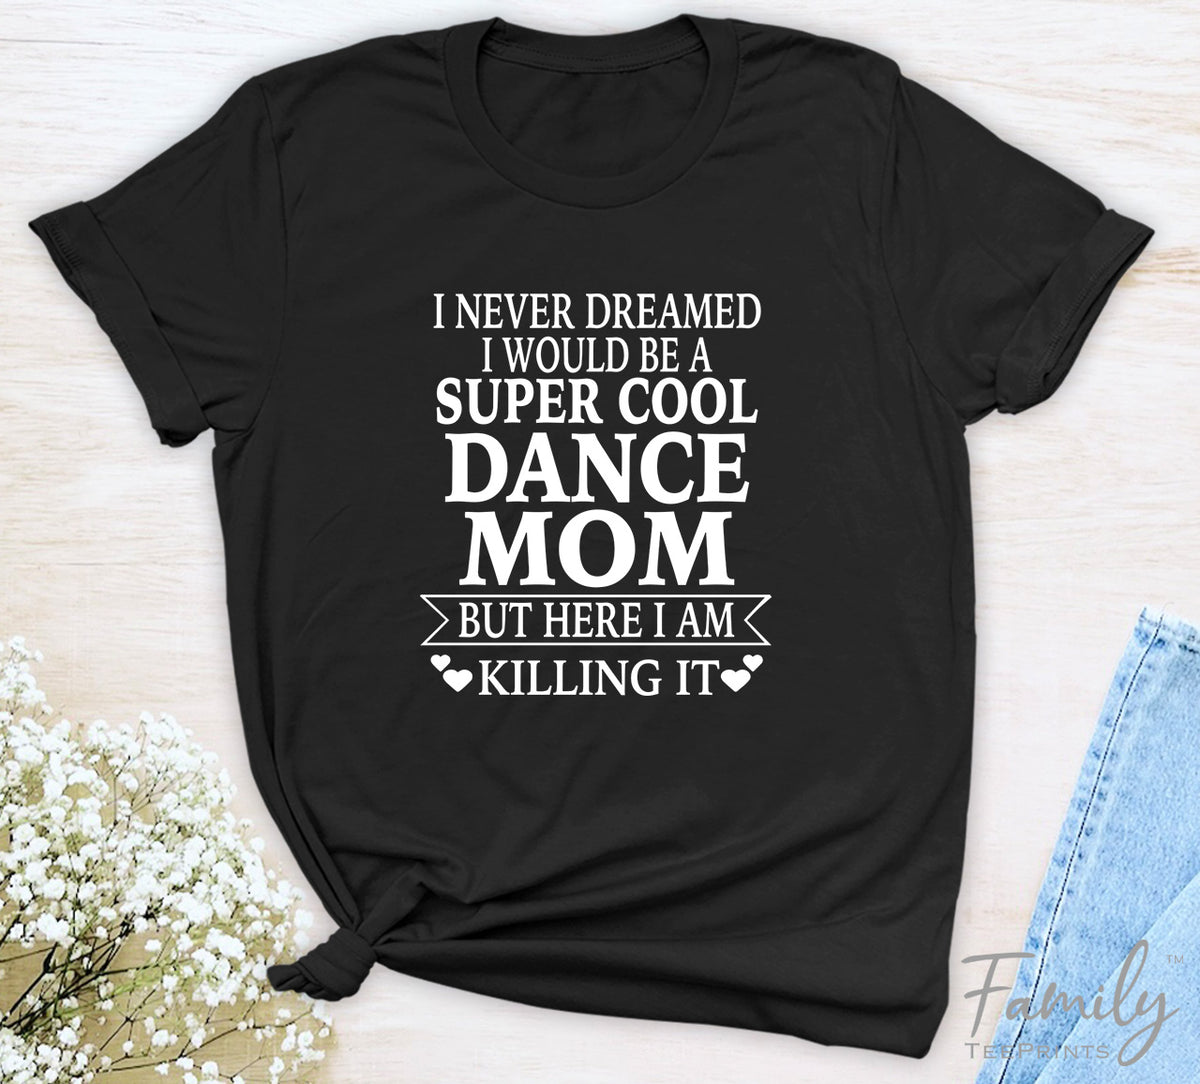 I Never Dreamed I'd Be A Super Cool Dance Mom...- Unisex T-shirt - Dance Mom Shirt - Gift For Dance Mom - familyteeprints